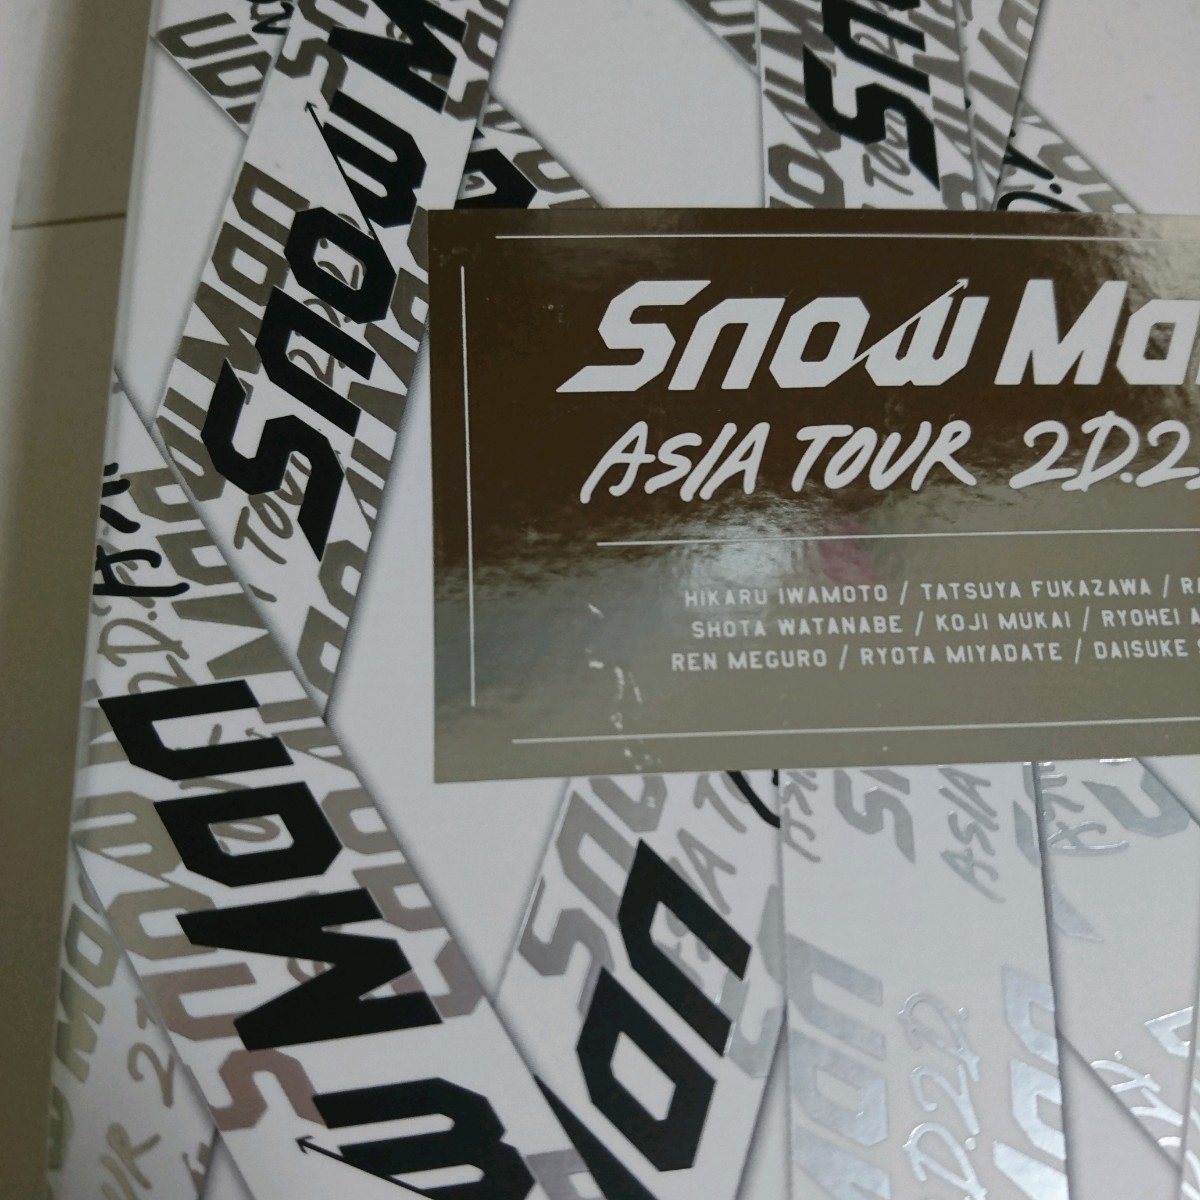 Snow Man ASIA TOUR 2D.2D. (DVD4枚組) (初回盤DVD) clinicacampinas